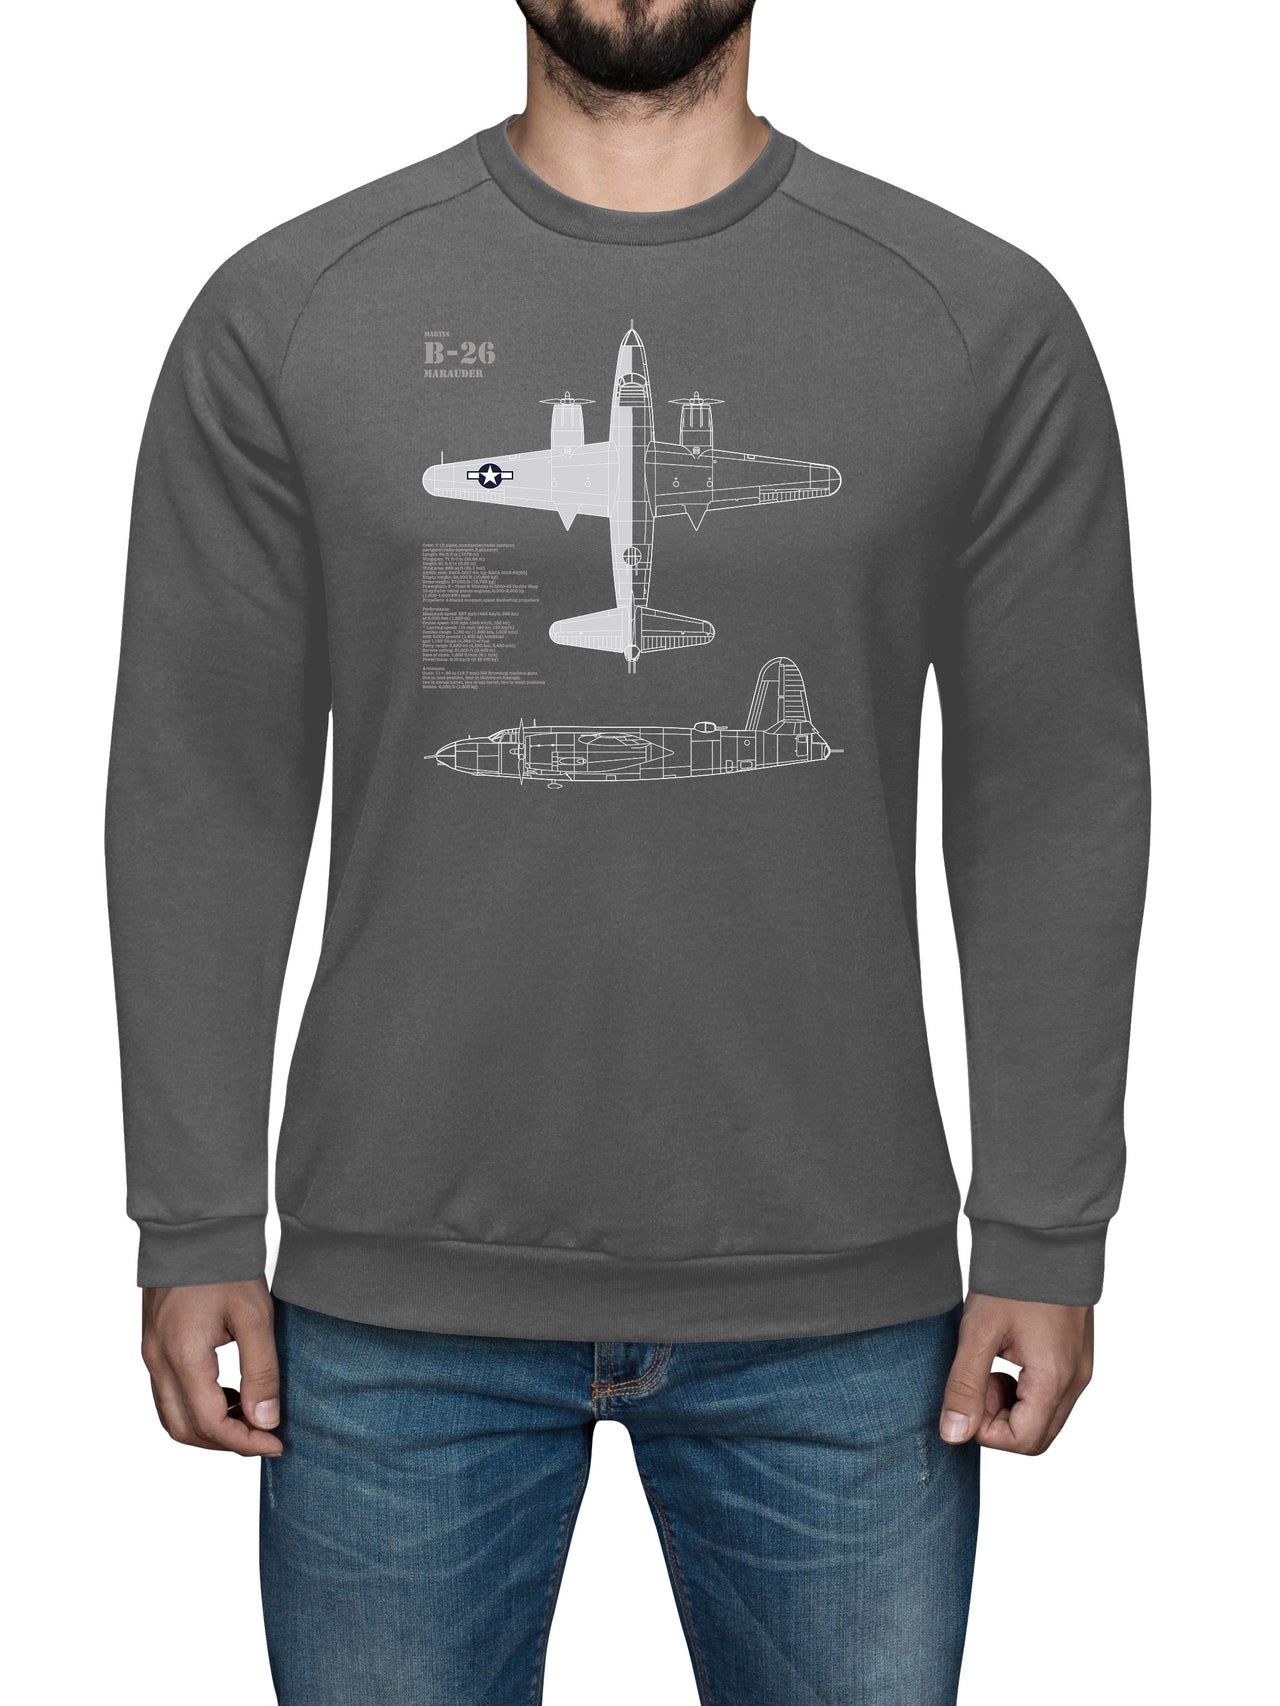 B-26 Marauder - Sweat Shirt